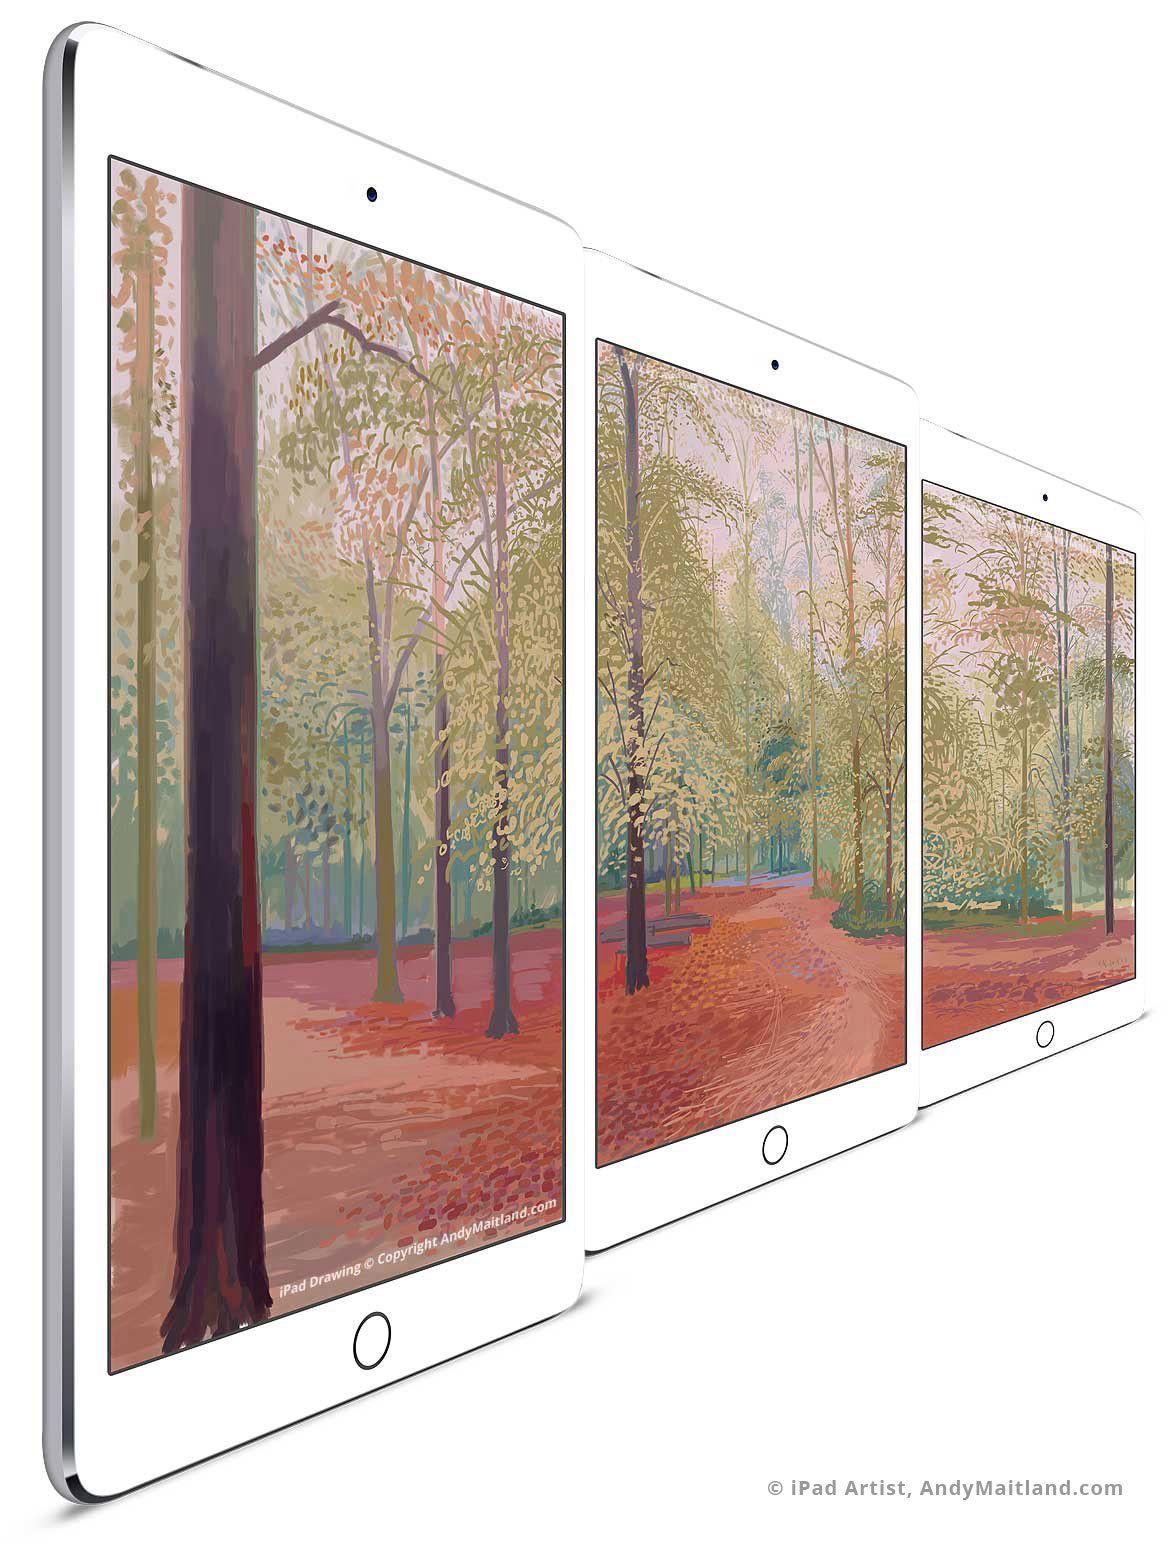 Andy Maitland, 2015, Autumn Mist, iPad Drawing drawn across three iPad Canvases.